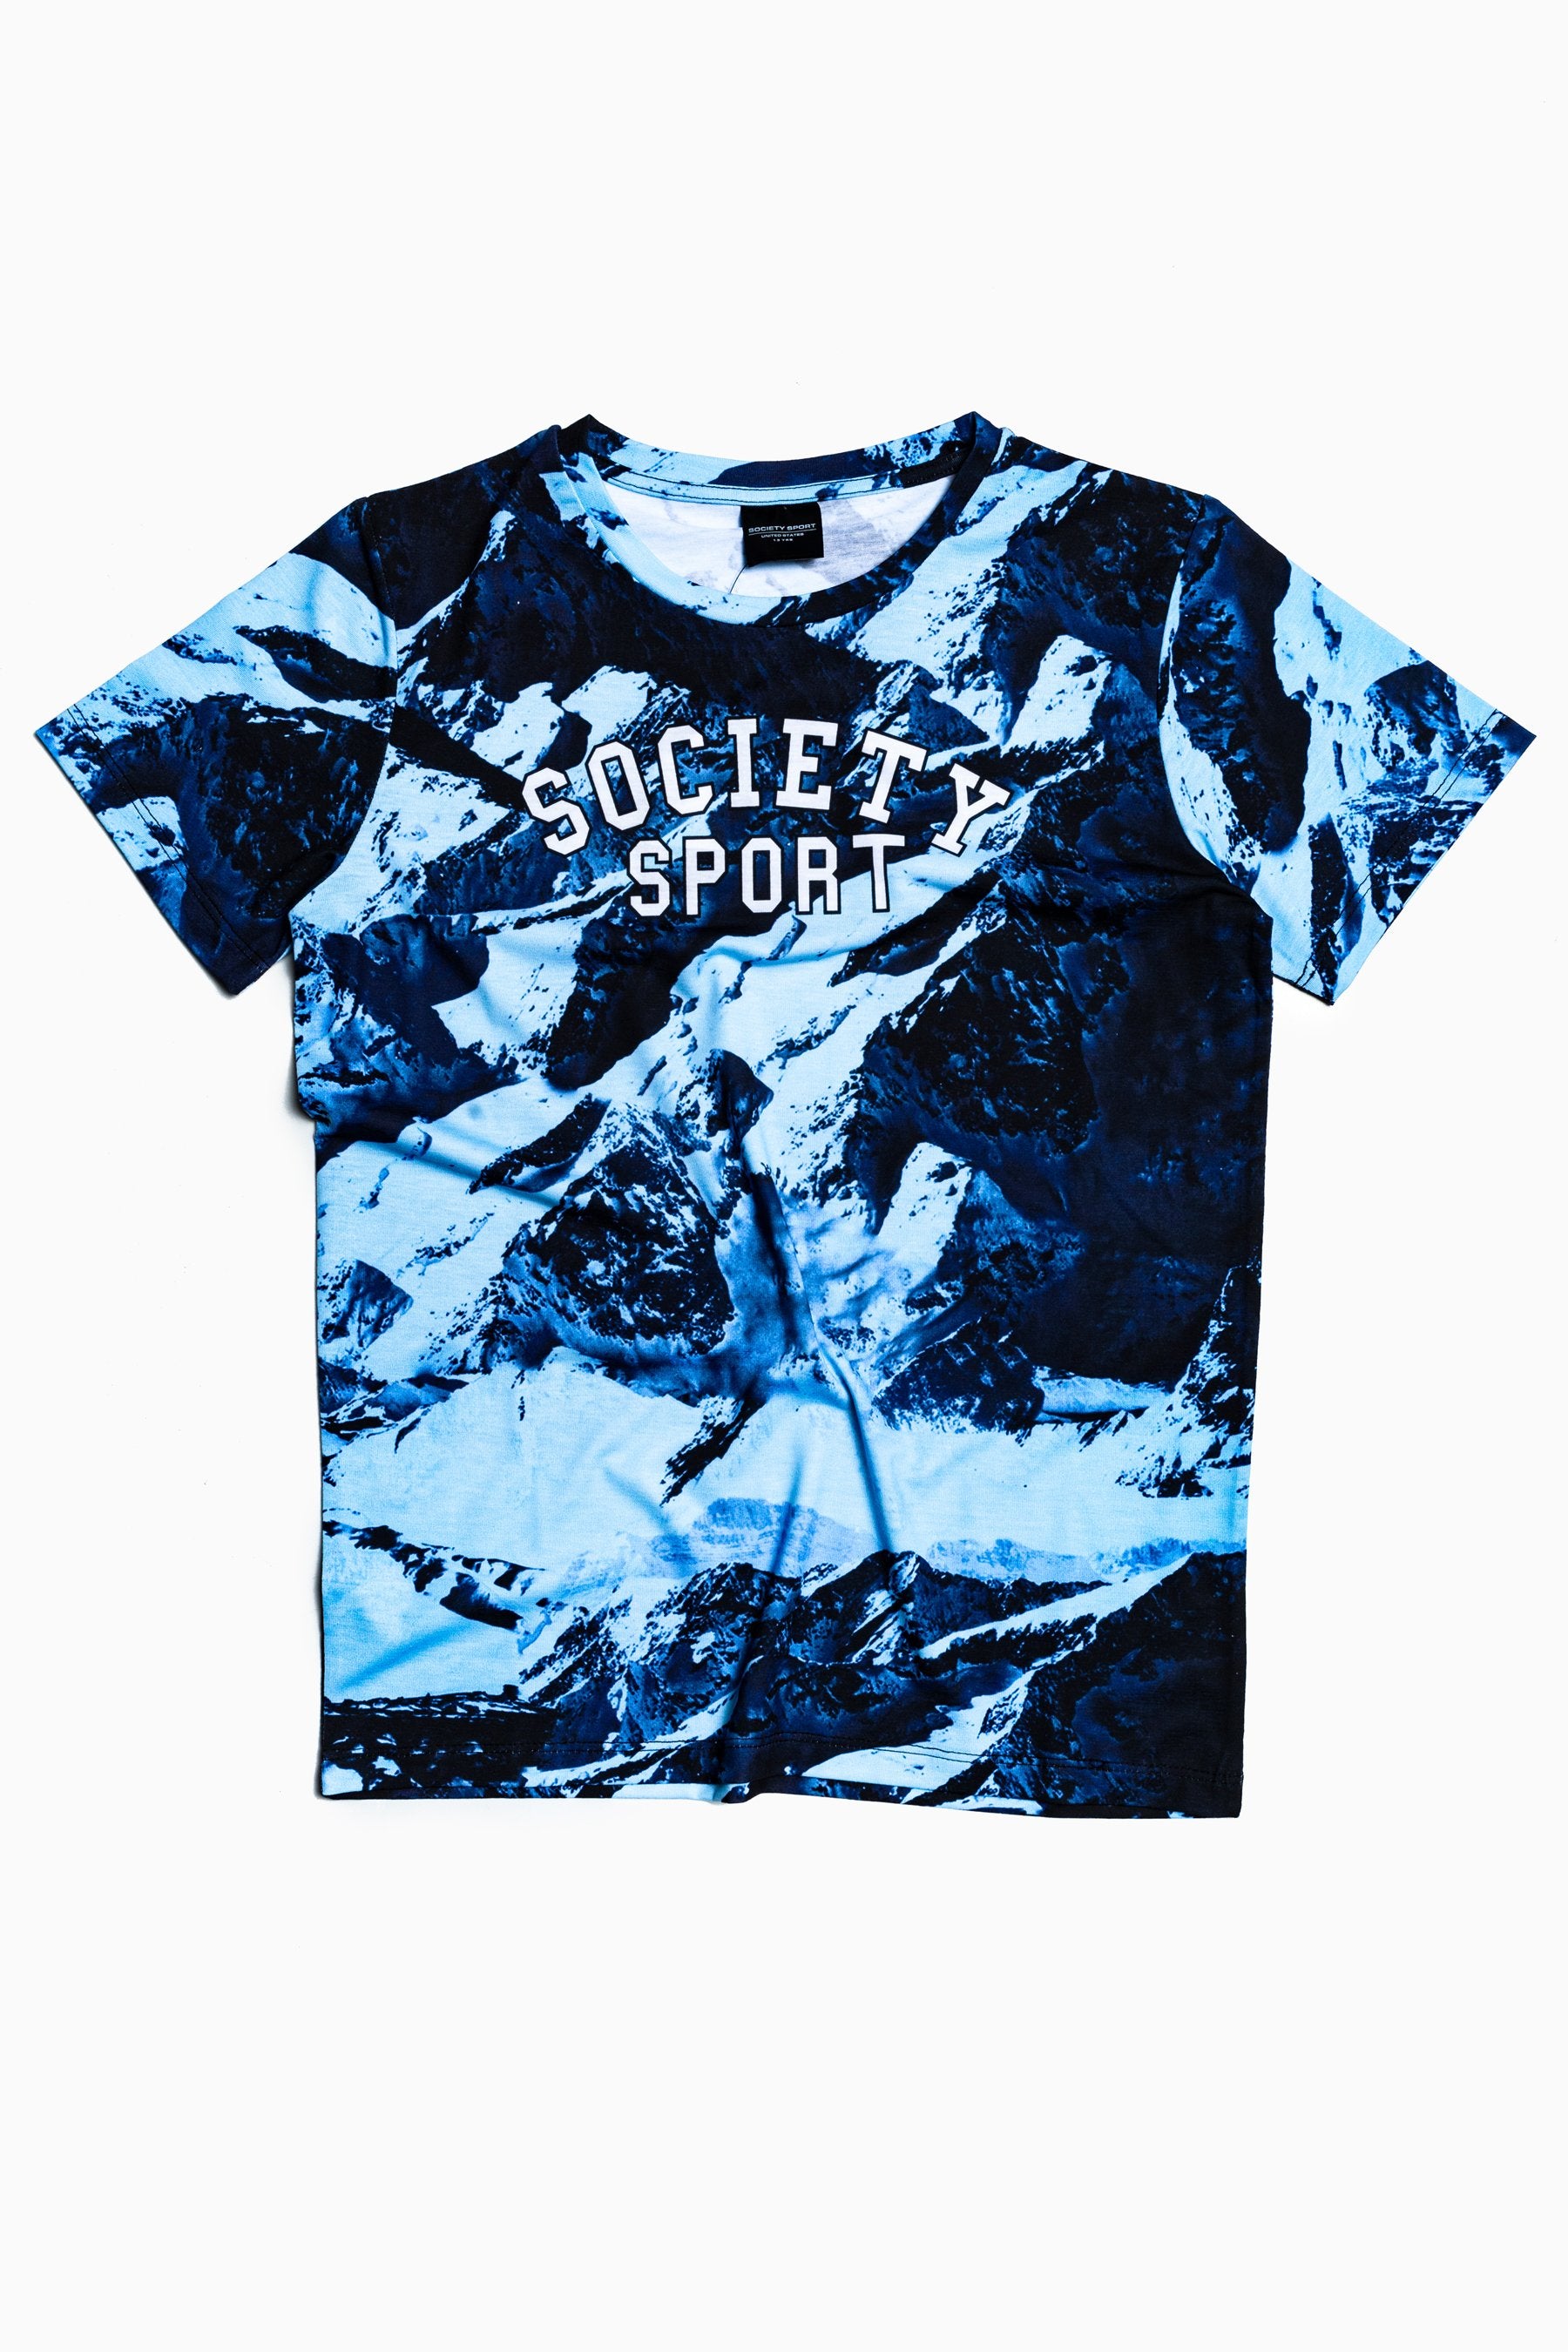 society sport mountain t-shirt